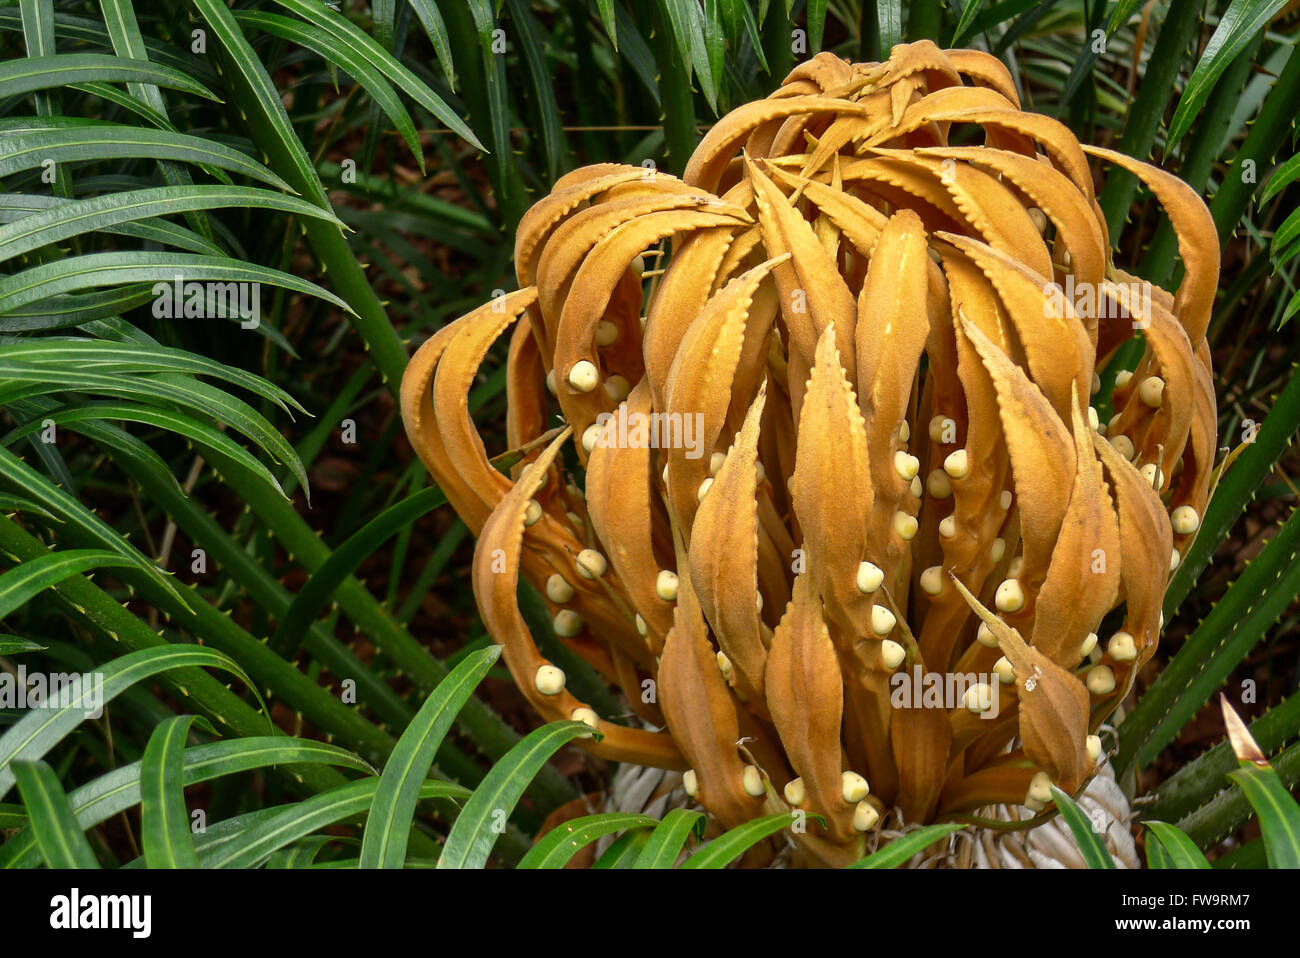 Malaysian cycad, Cycas circinalis, cone of the female plant Stock Photo